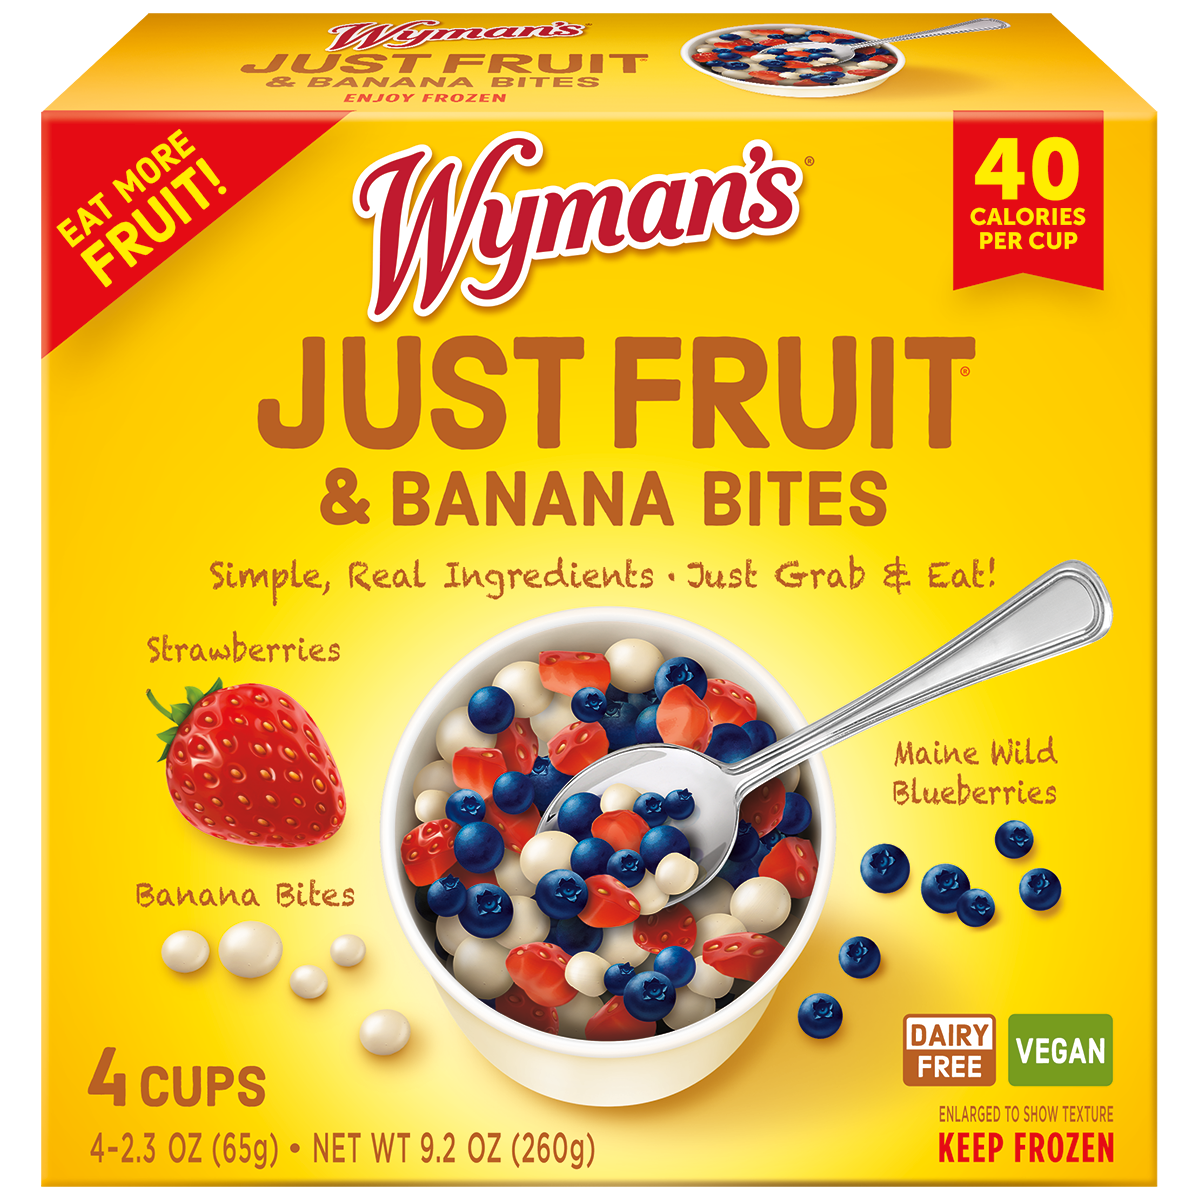 Wyman's Just Fruit & Banana Bites